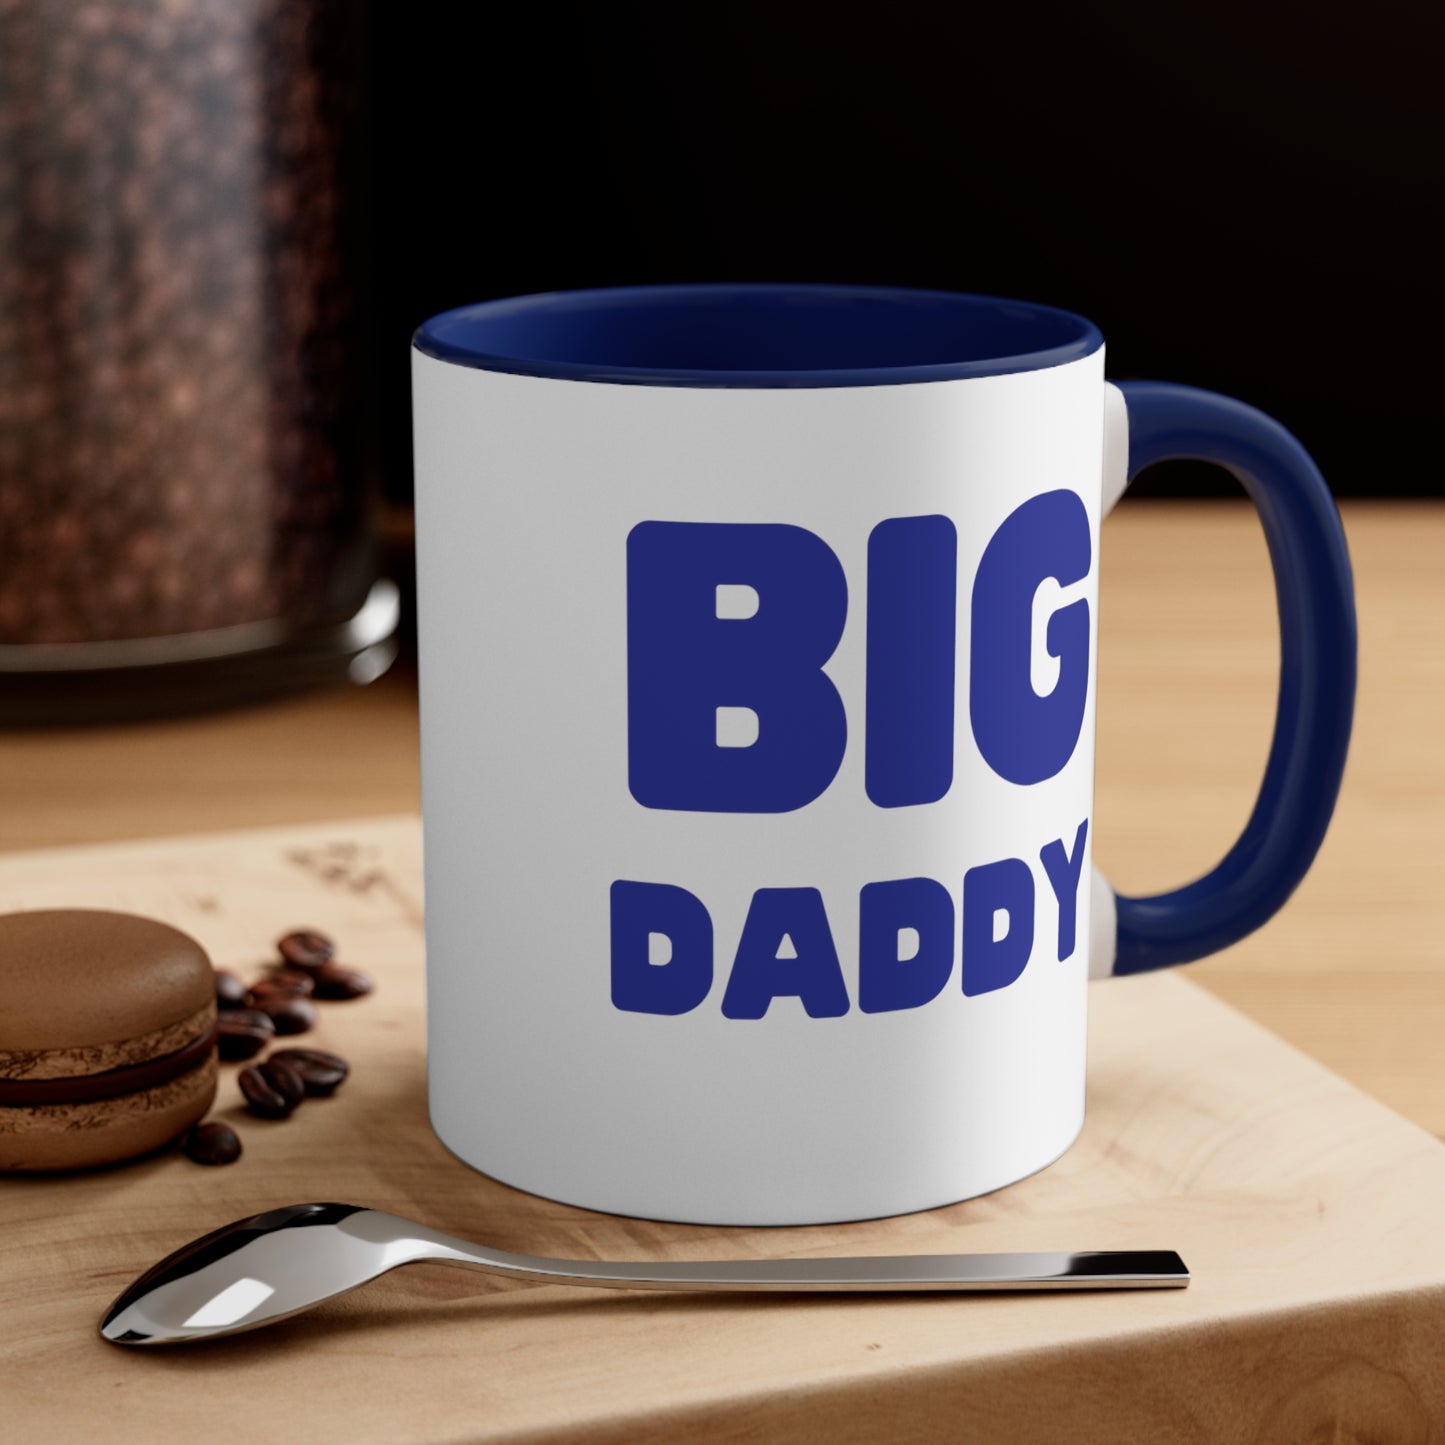 Big Daddy Mug